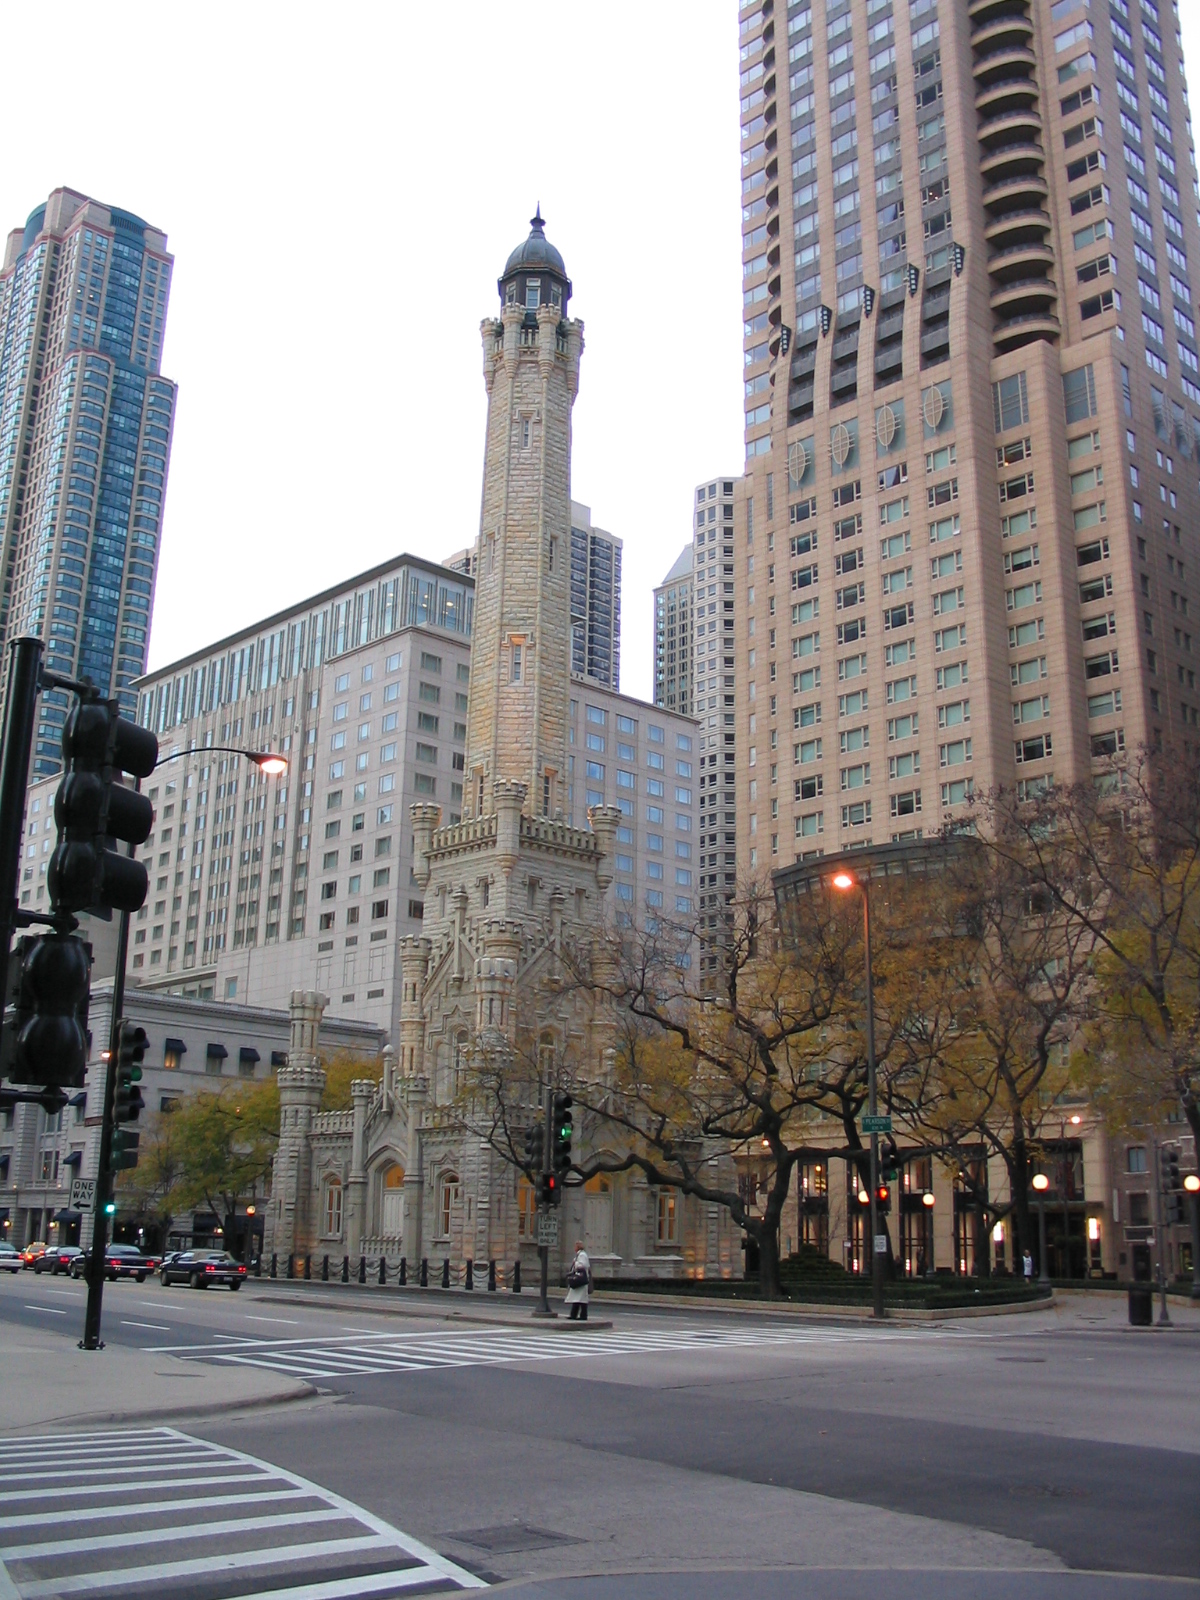 FileDowntown Chicago Illinois Nov05 img 2607.jpg Wikimedia Commons